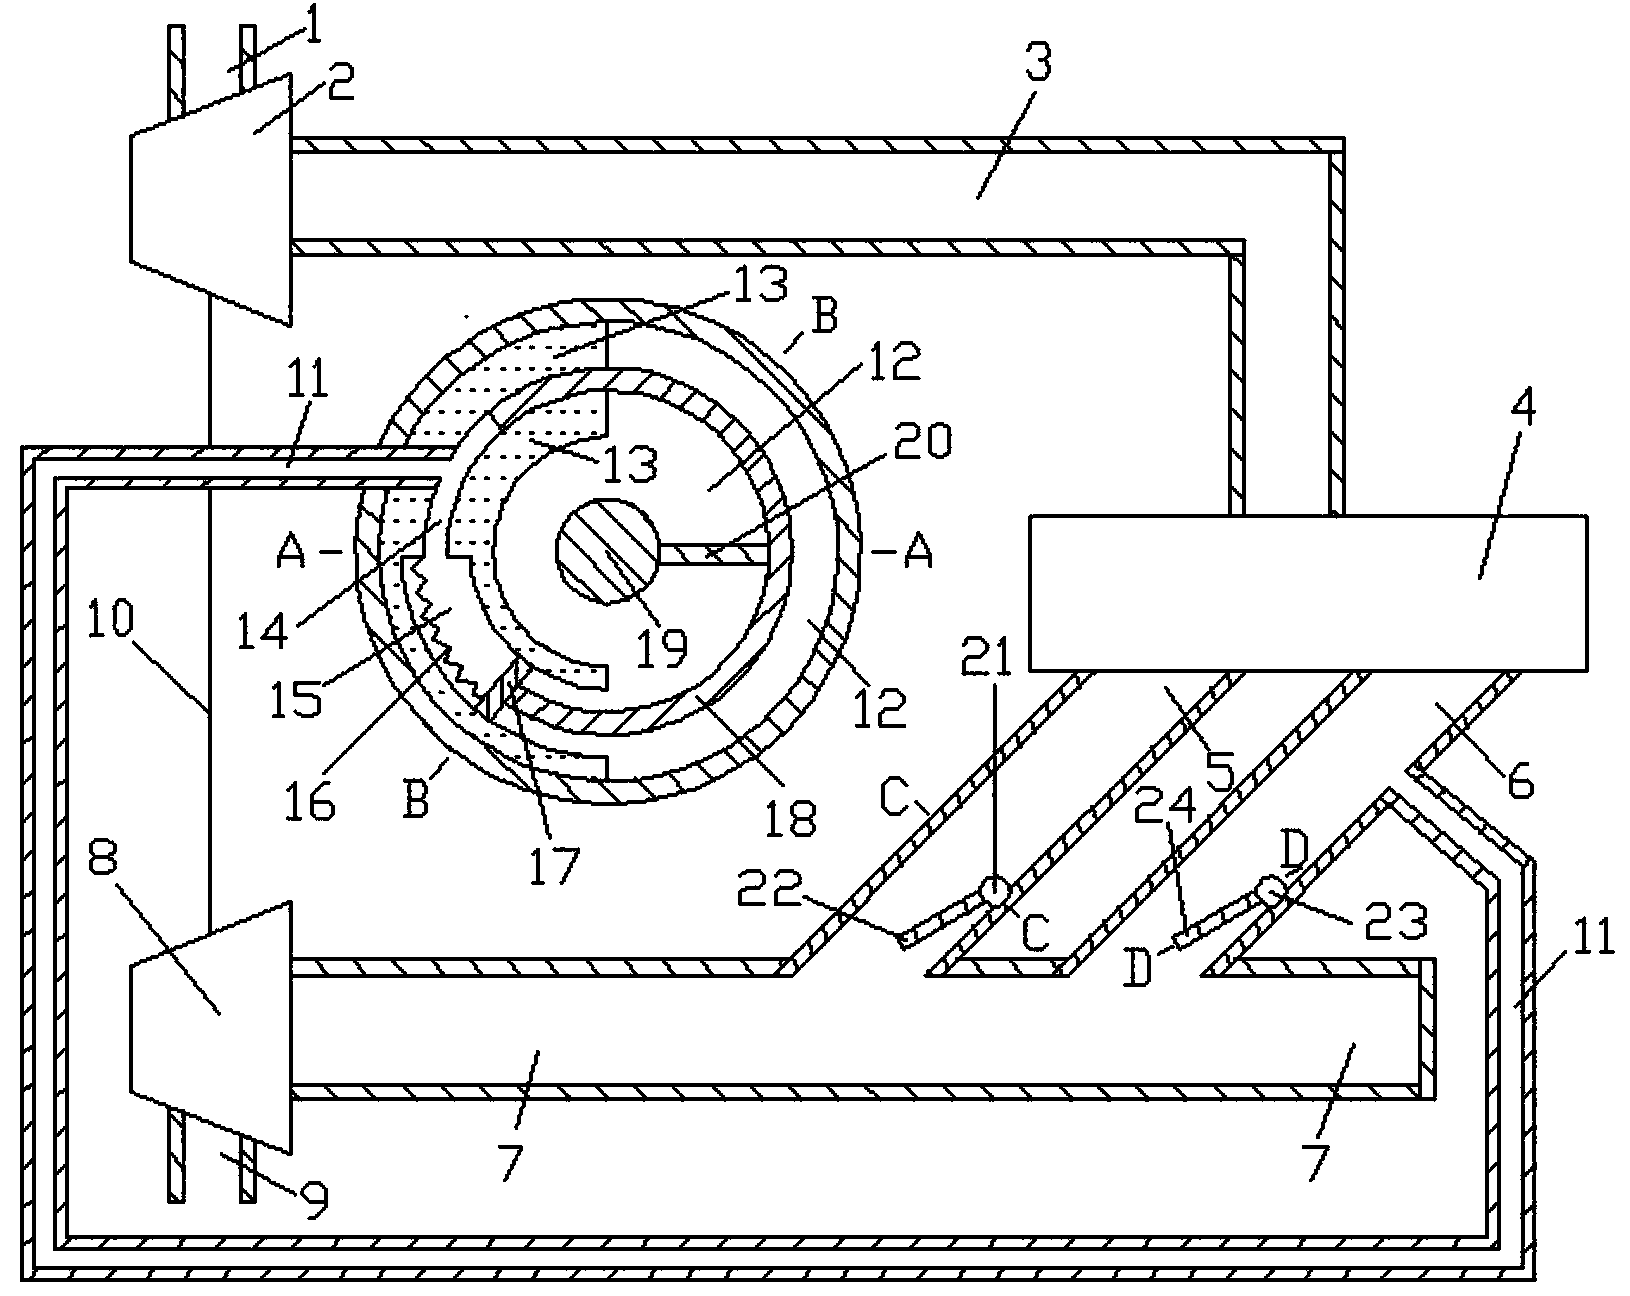 Exhaust manifold circulation area self-regulation type engine system